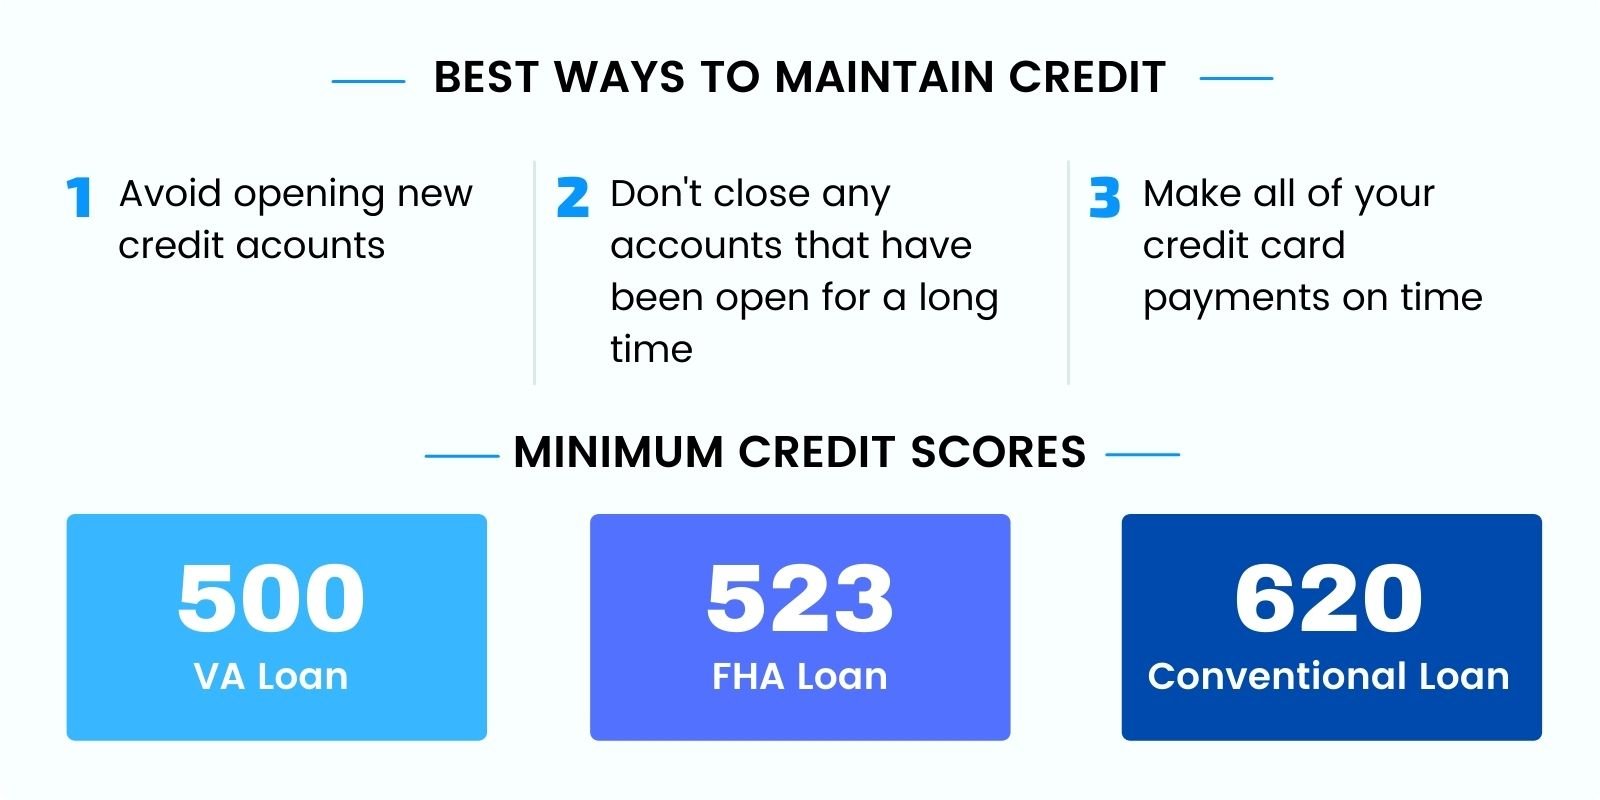 Maintain Credit & Min Credit Scores